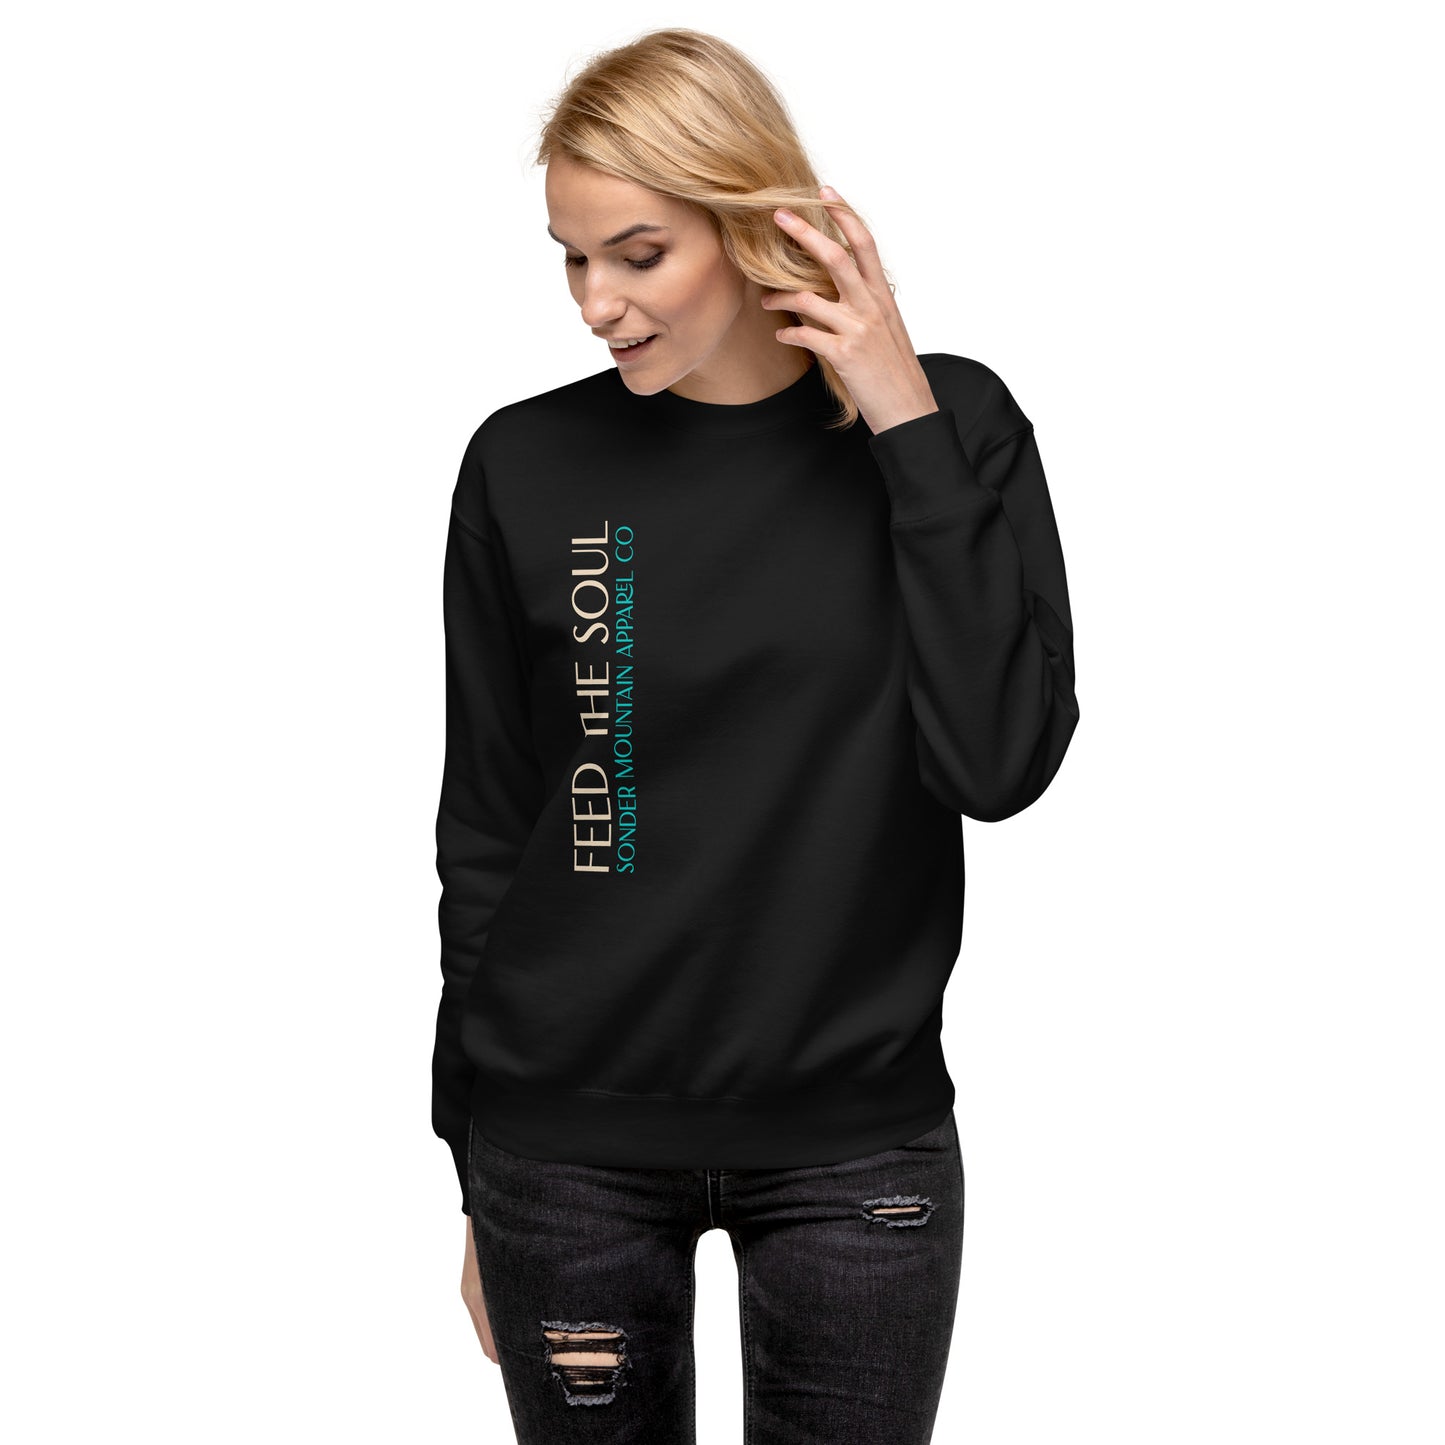 Starve The Ego - Unisex Premium Sweatshirt